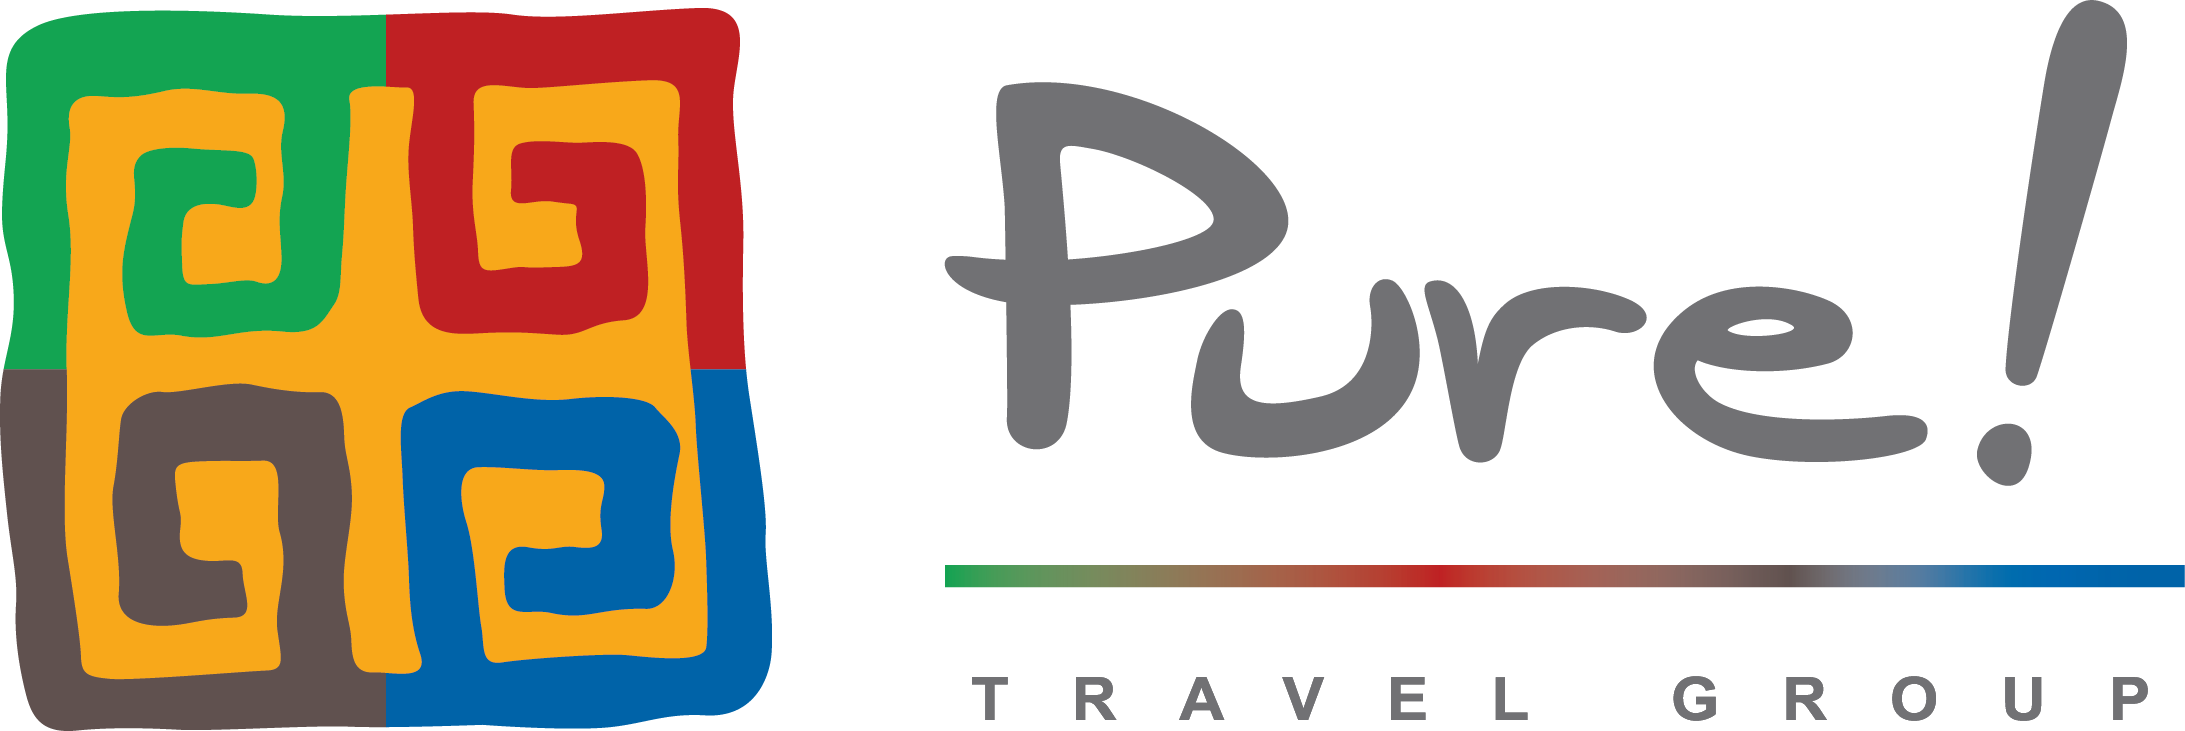 PureTravelGroup_Logo_2.png